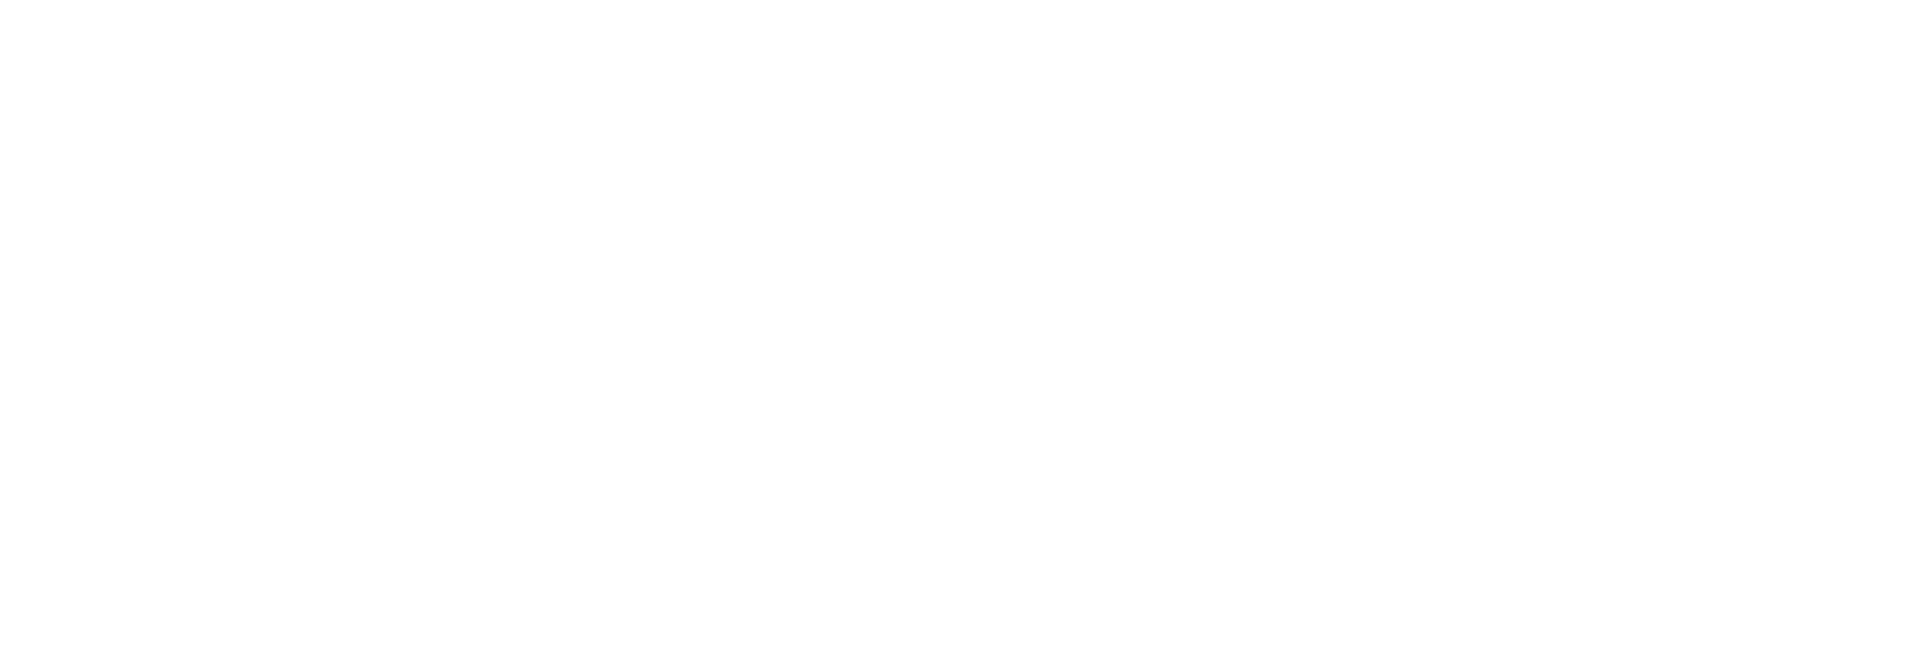 Saint Savoy